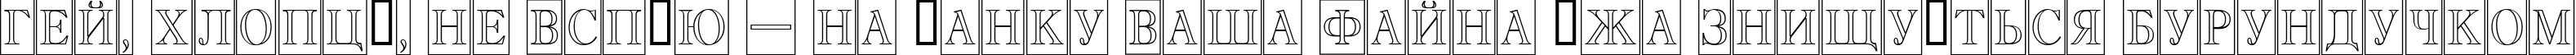 Пример написания шрифтом a_AntiqueTitulTrCmOtl текста на украинском